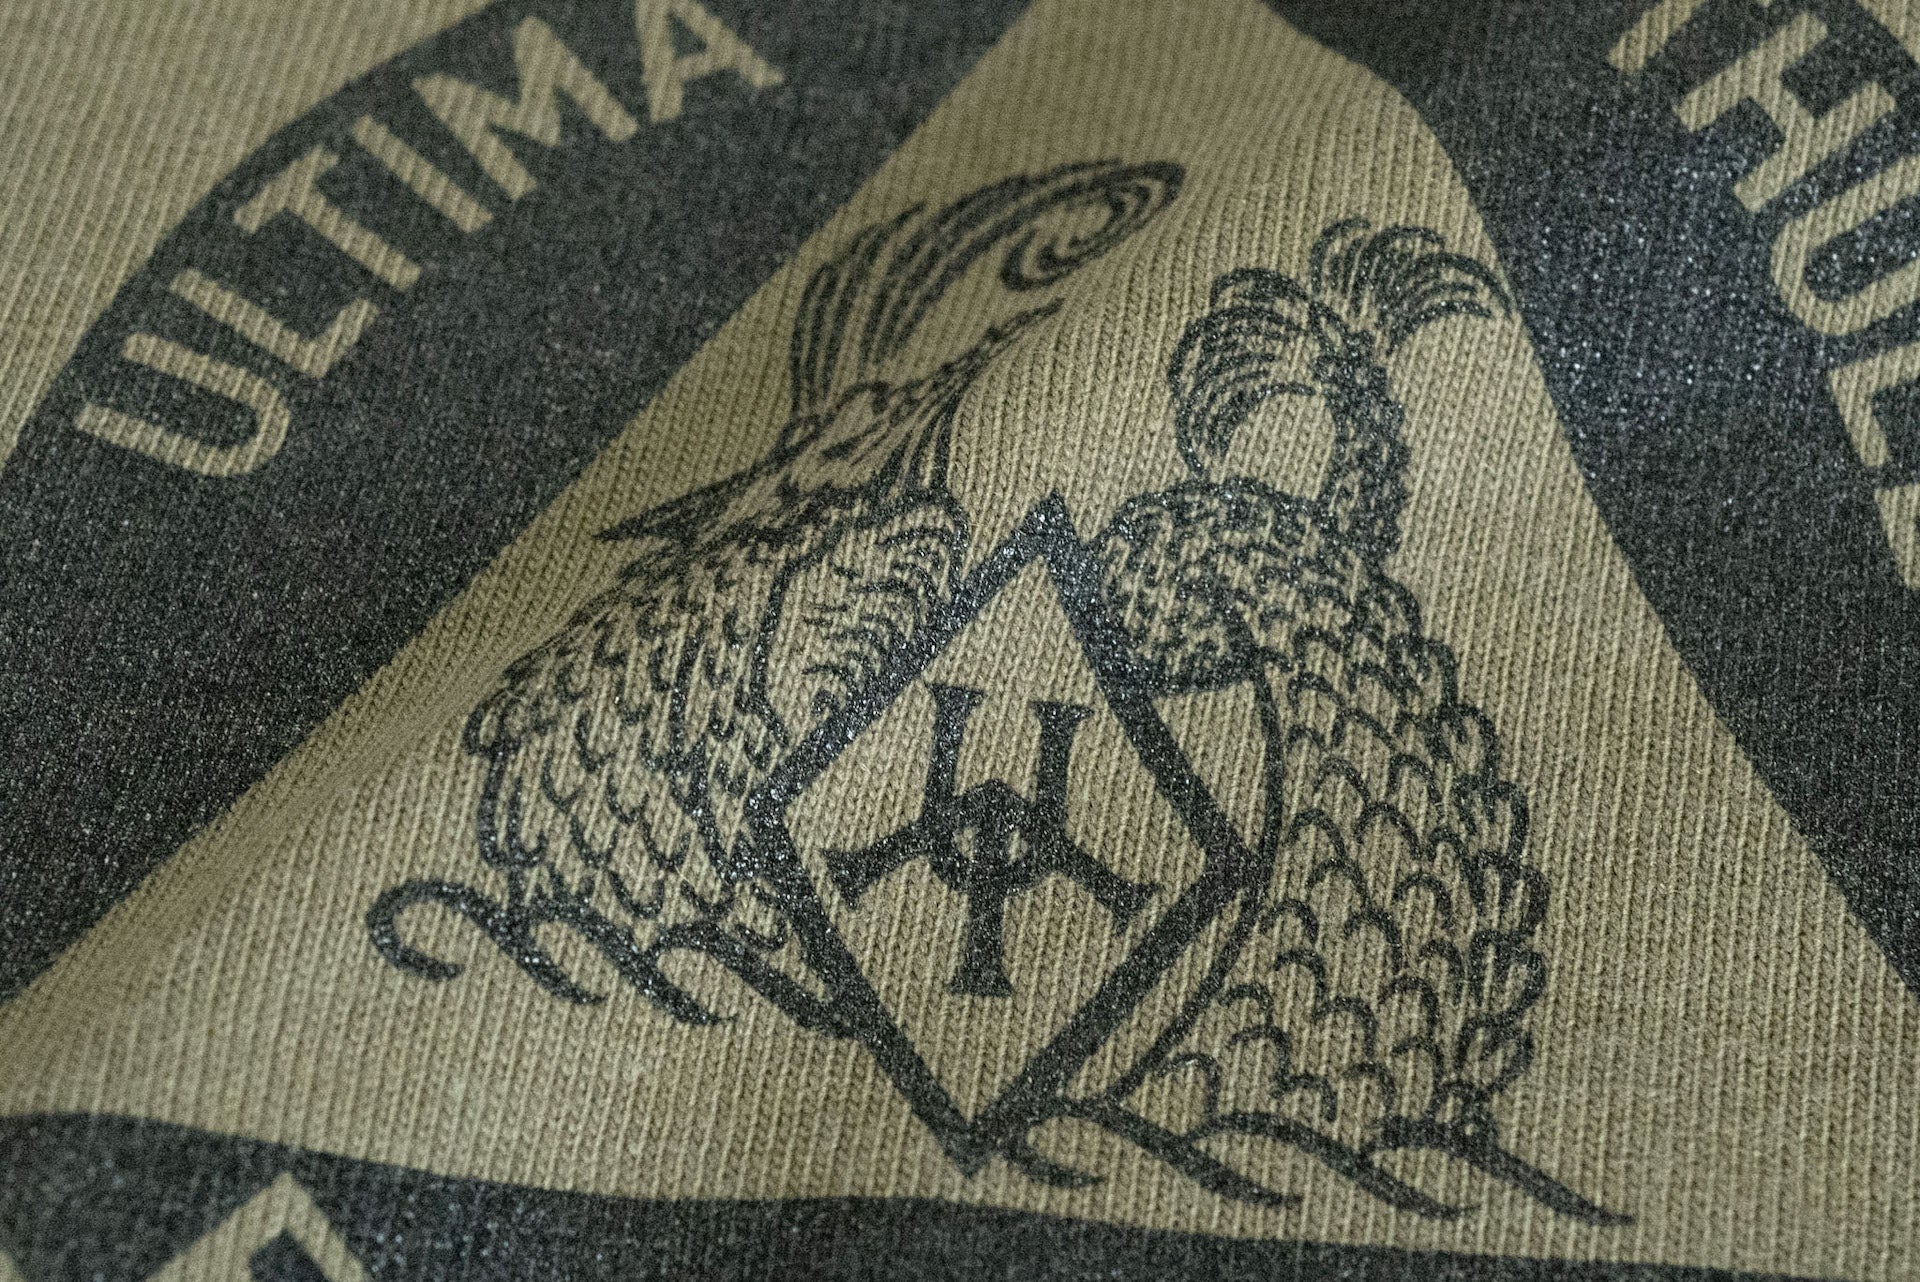 Ultima Thule by Freewheelers "Equipment Logo" S/S Tee (Olive)